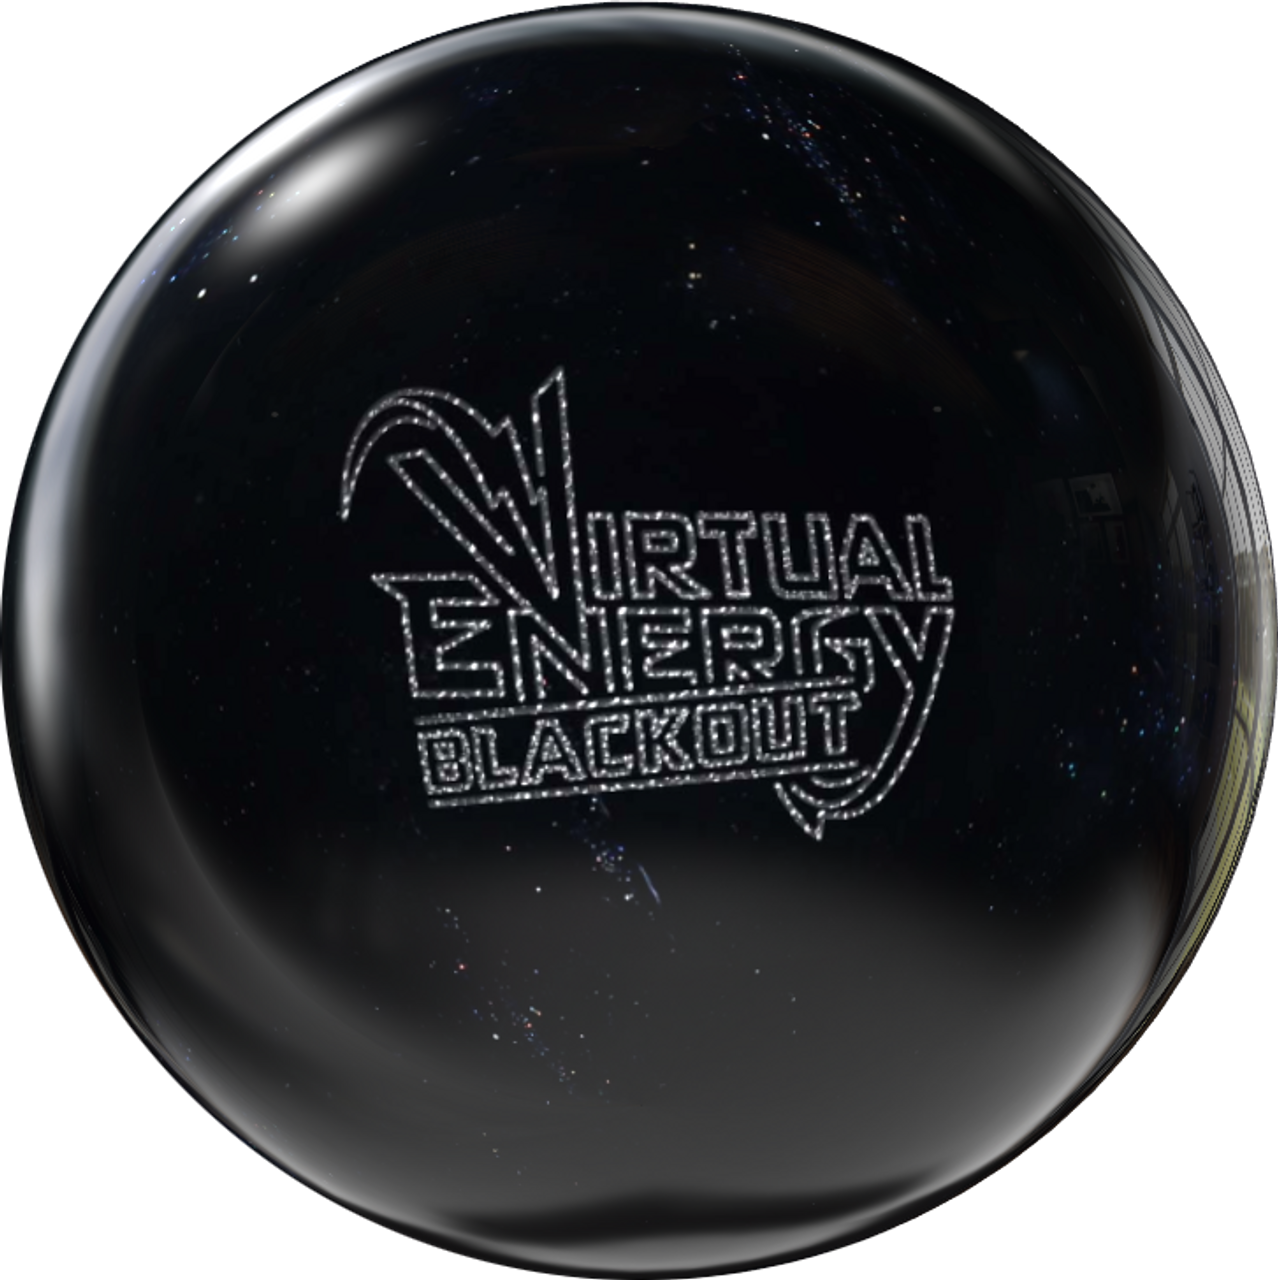 Storm Virtual Energy Blackout Bowling Ball FREE SHIPPING